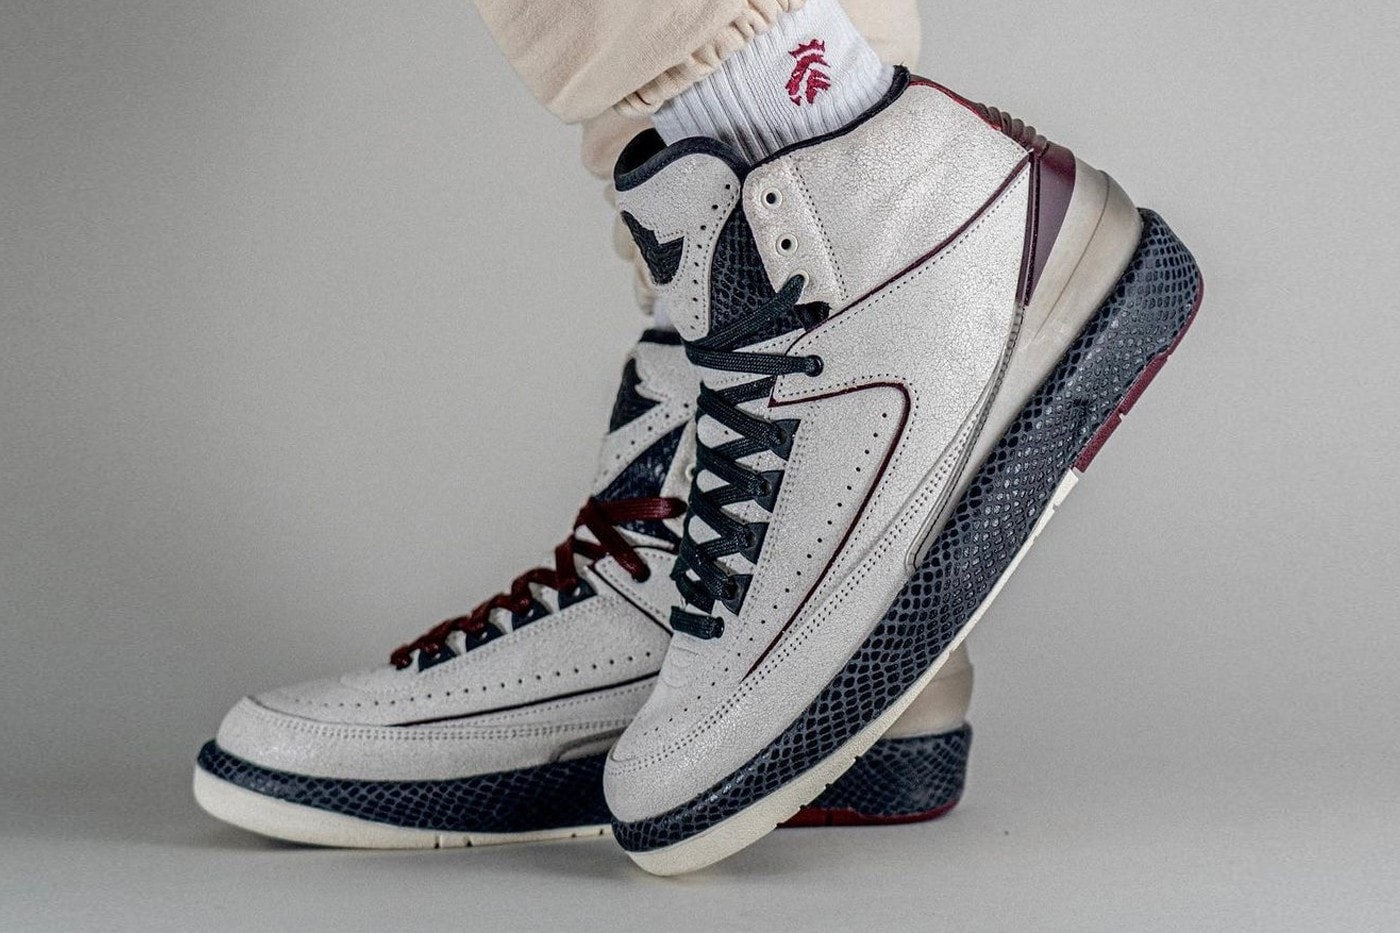 Sneaker Release Calendar New Balance Nike Air Jordan Reebok ASICS 